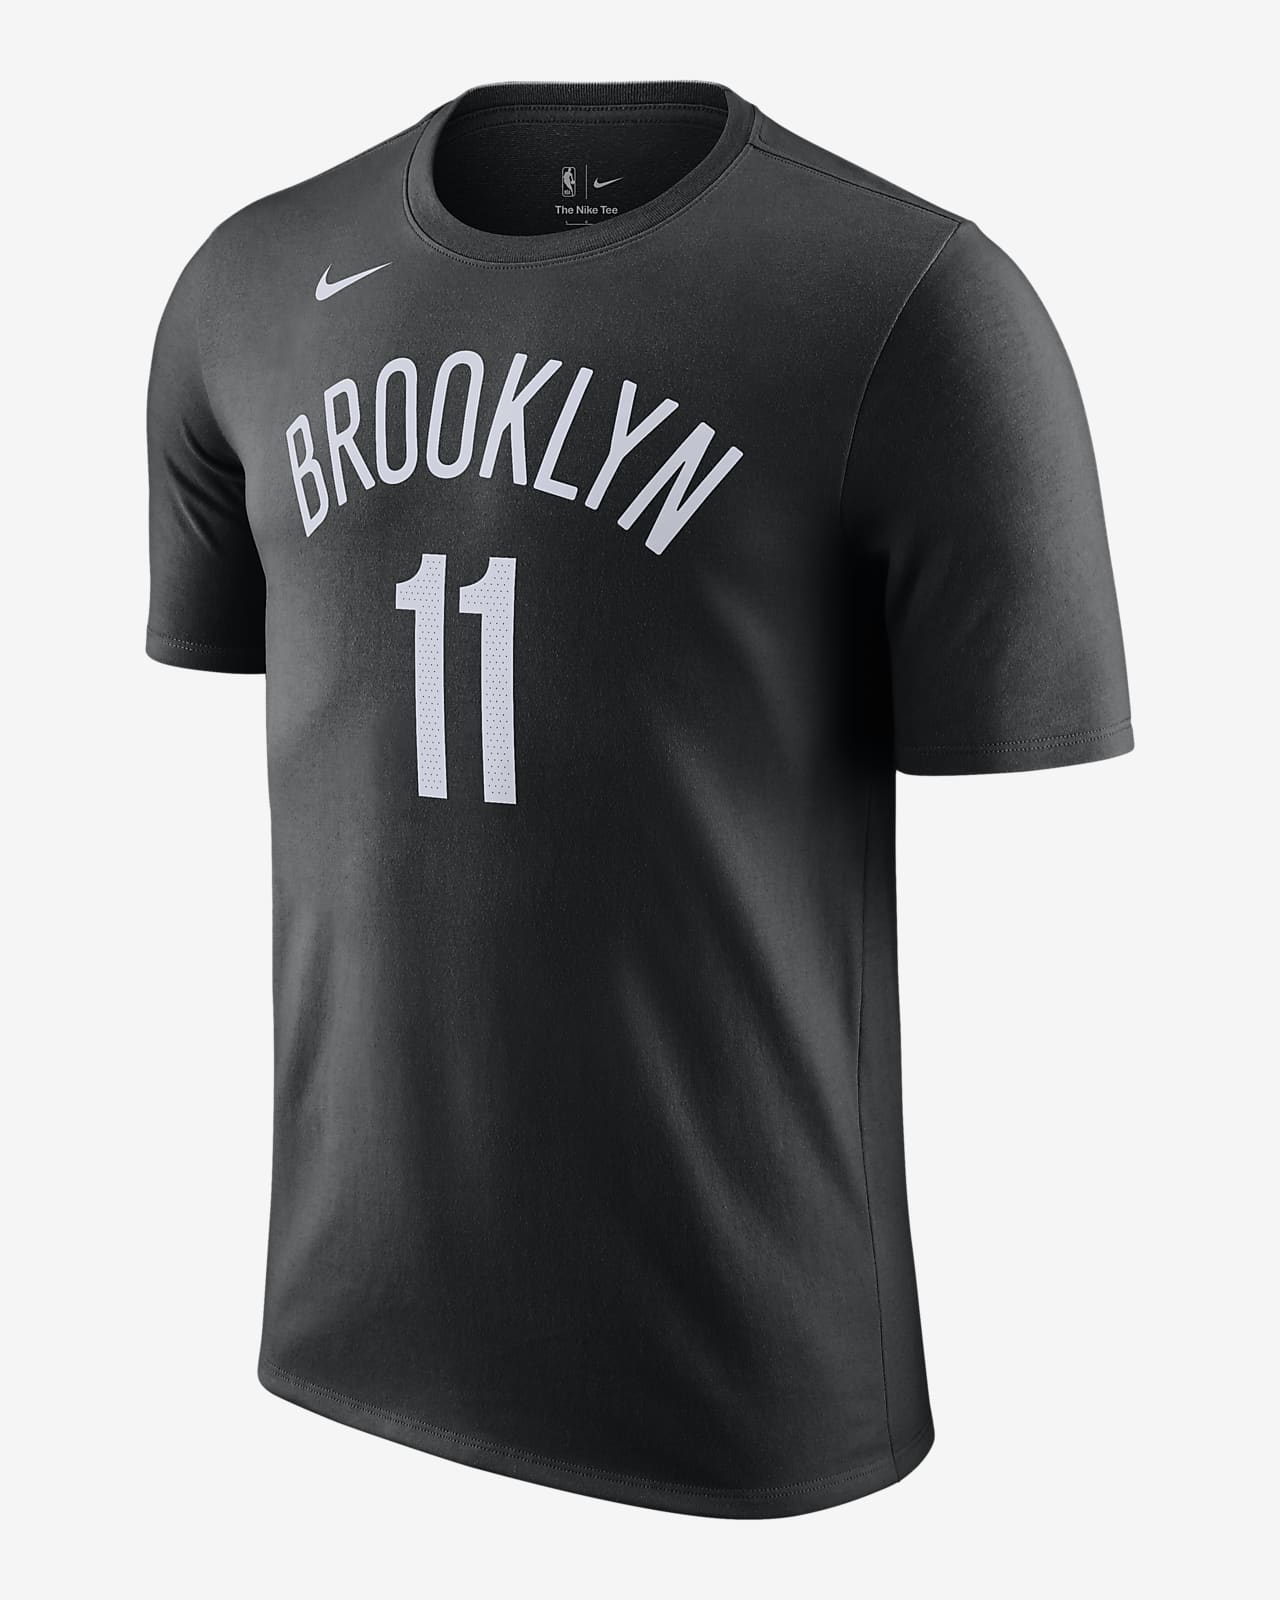 Playera Nike NBA para hombre Brooklyn Nets